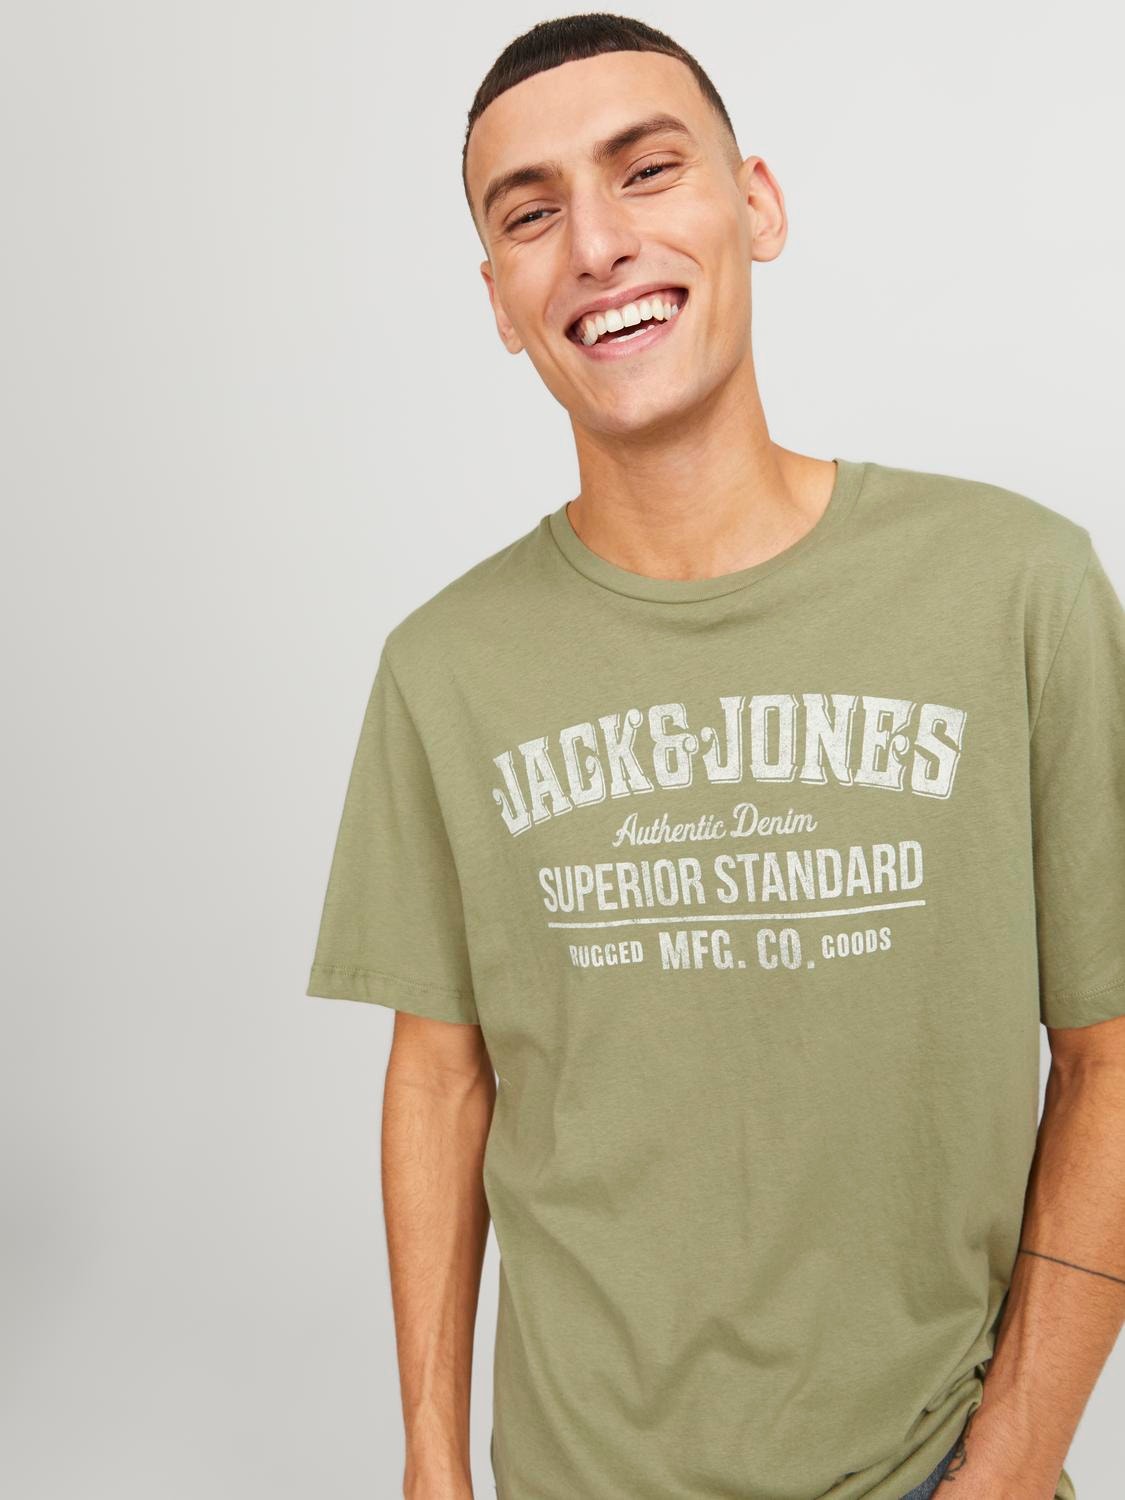 Jack & Jones Camiseta Logotipo Cuello redondo -Oil Green - 12232972